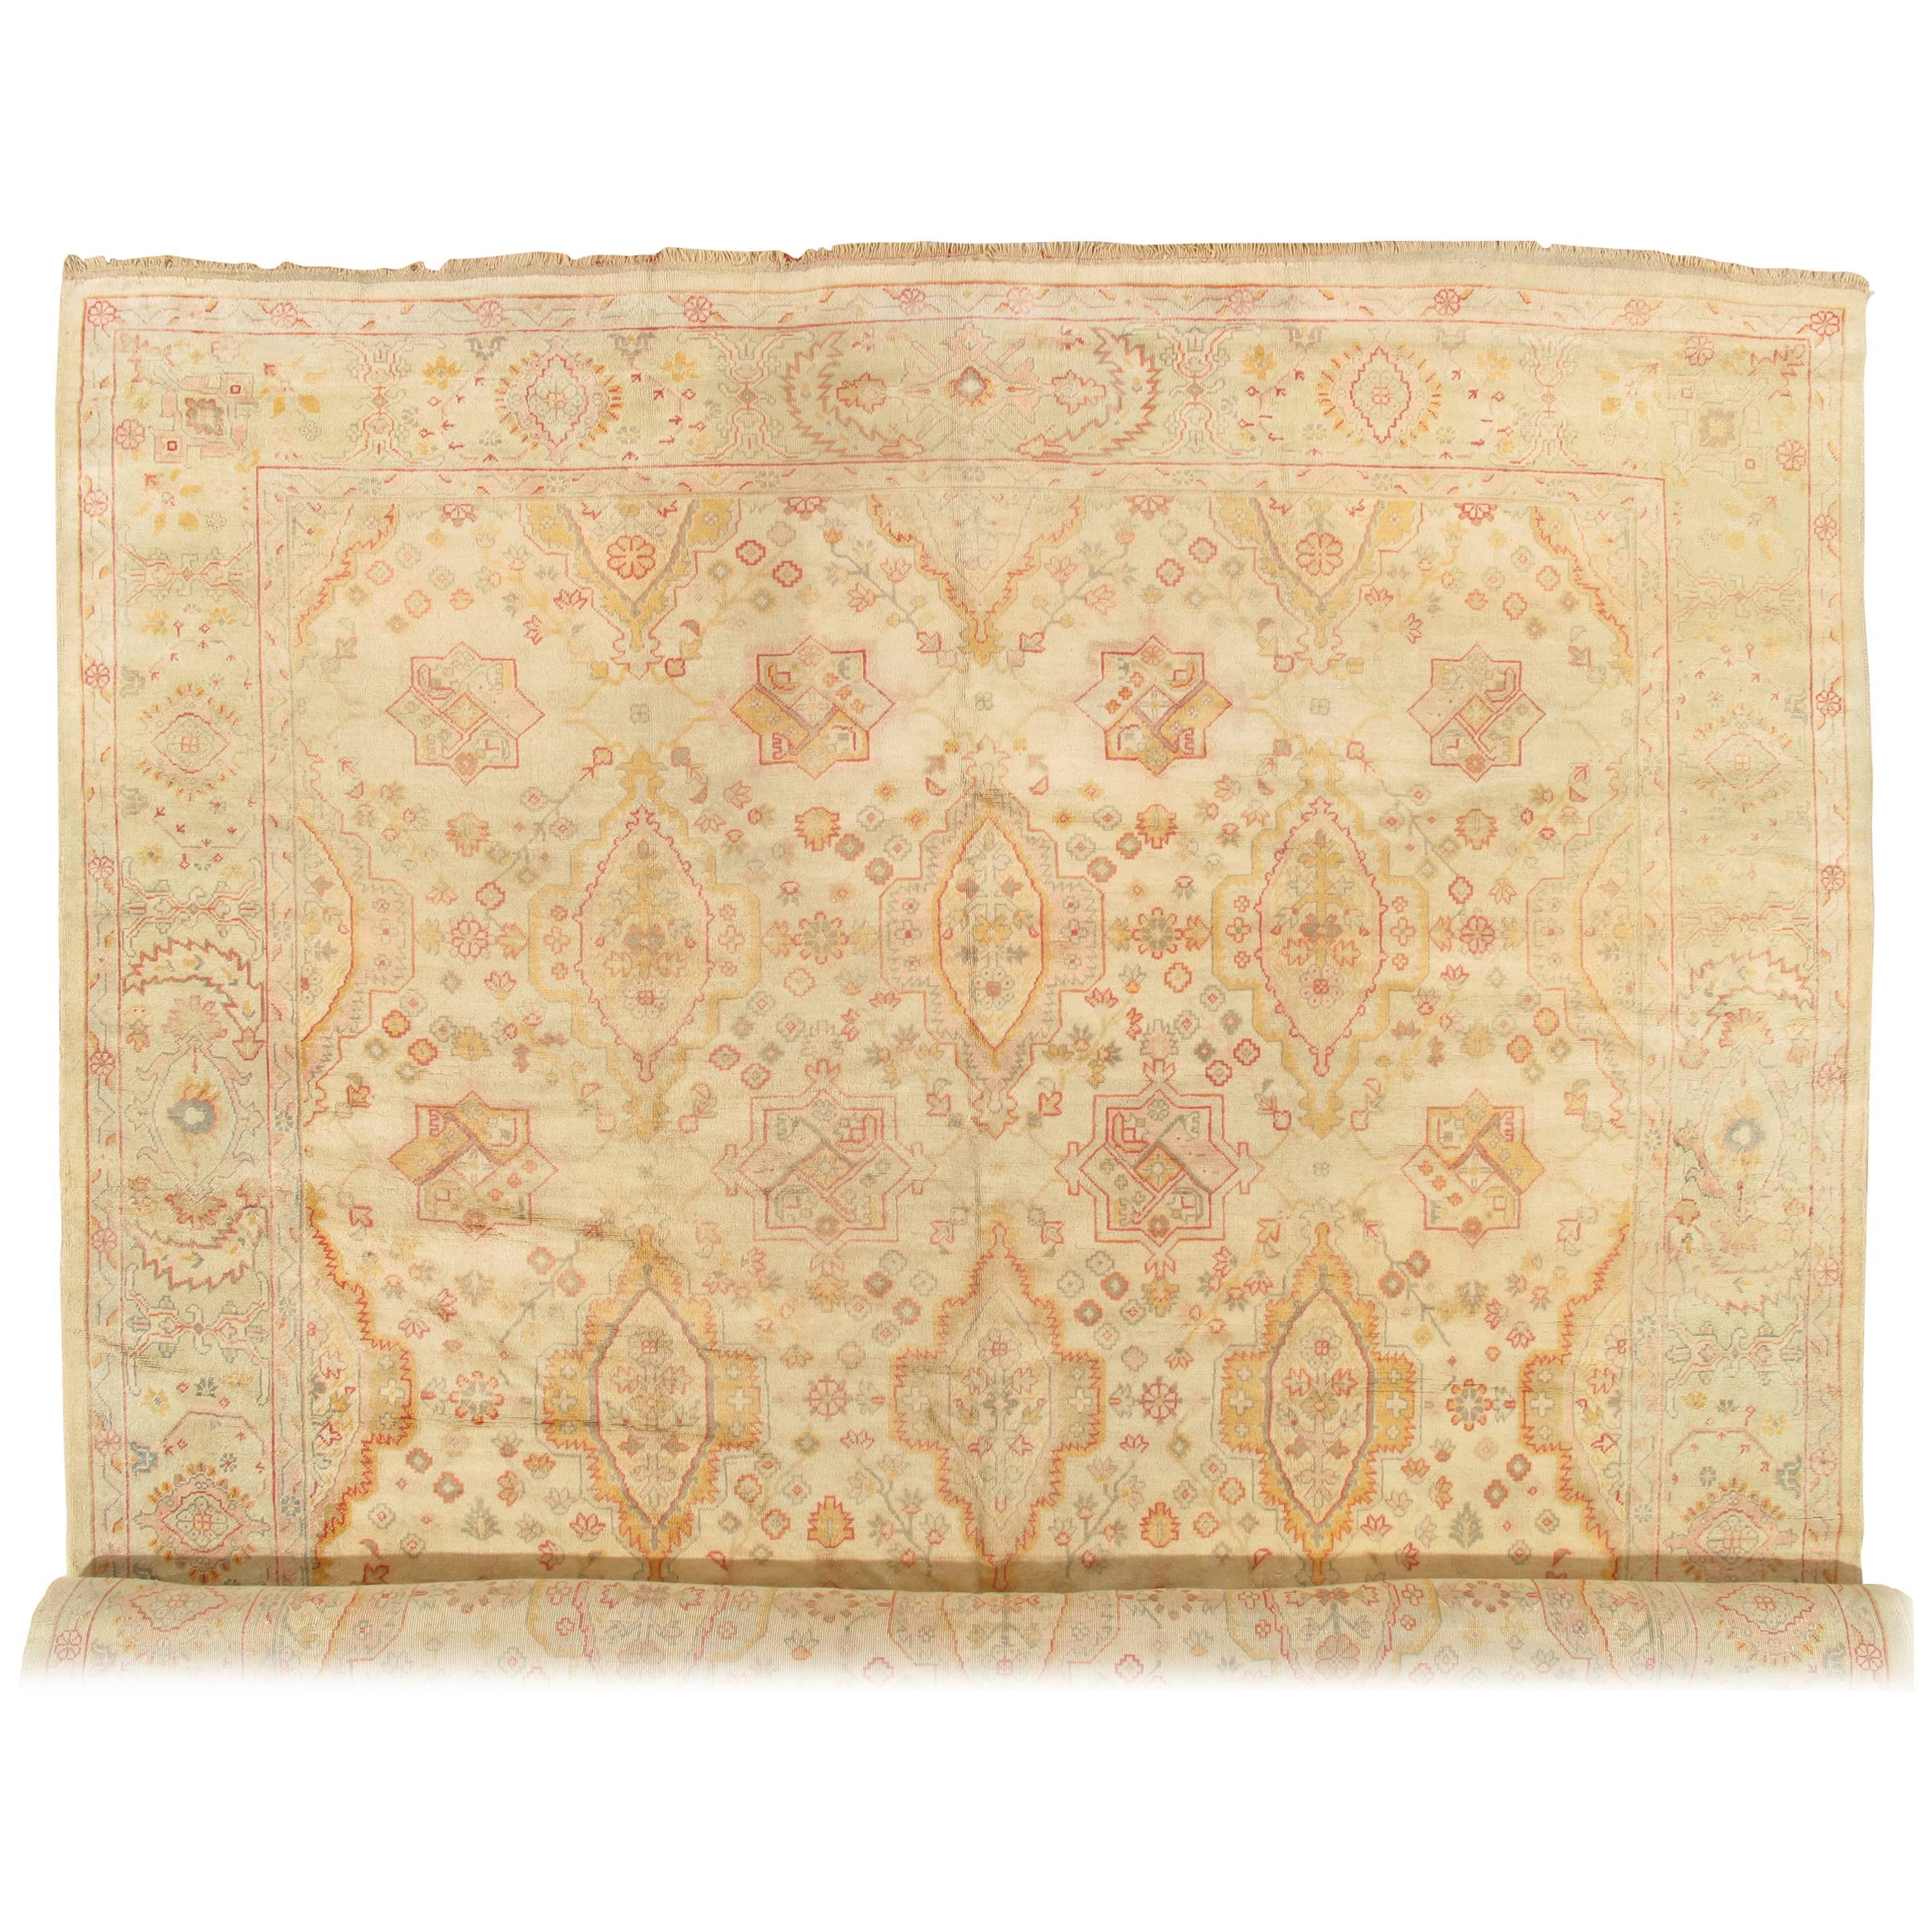 Antique Oushak Carpet, Oriental Rug, Handmade Ivory, Muted Shrimp, Soft Saffron